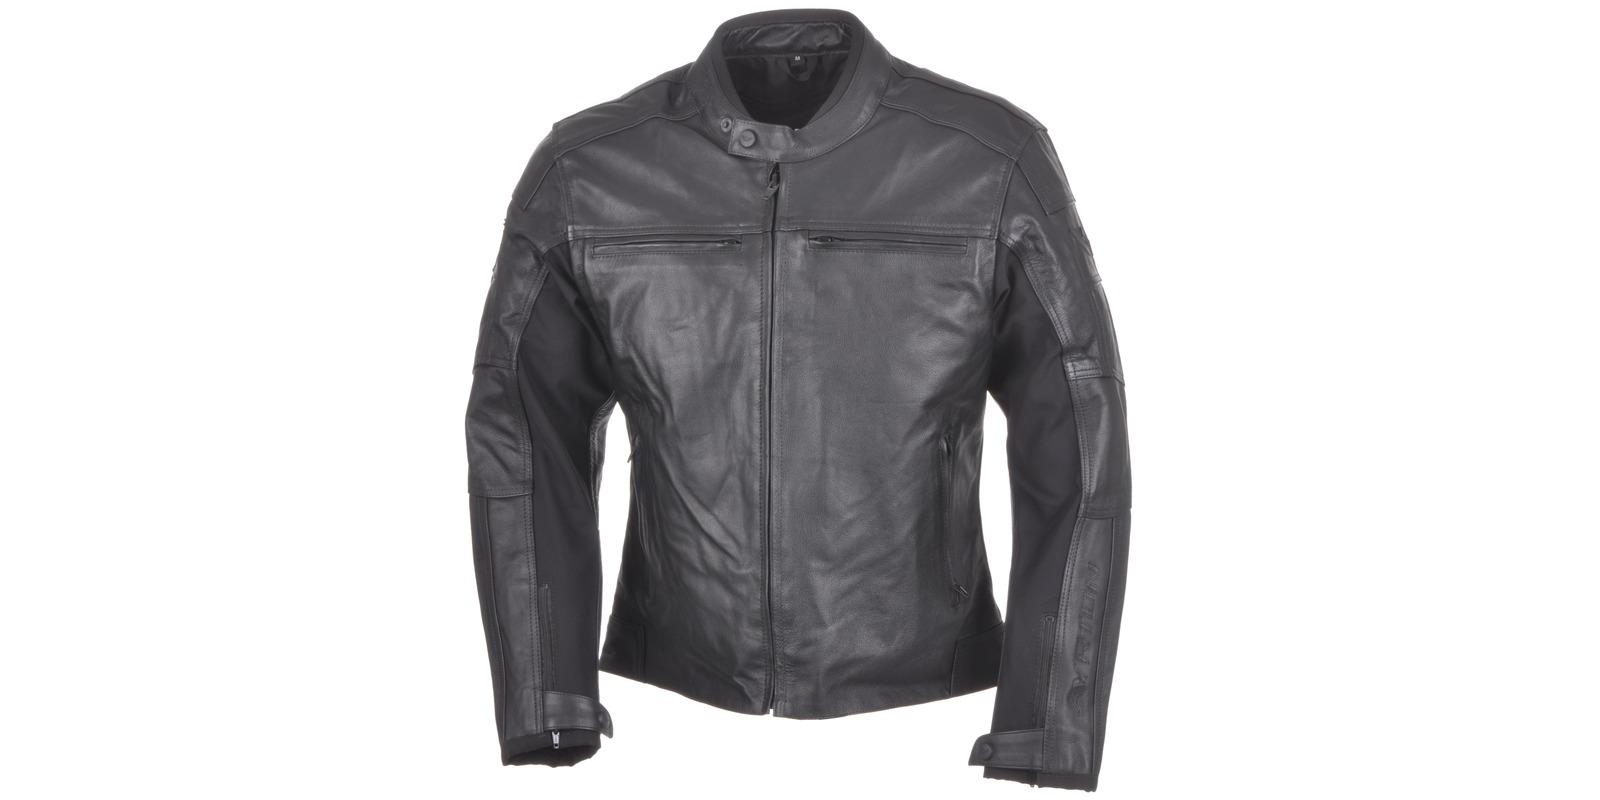 bunda Classic Leather, AYRTON - ČR (černá)